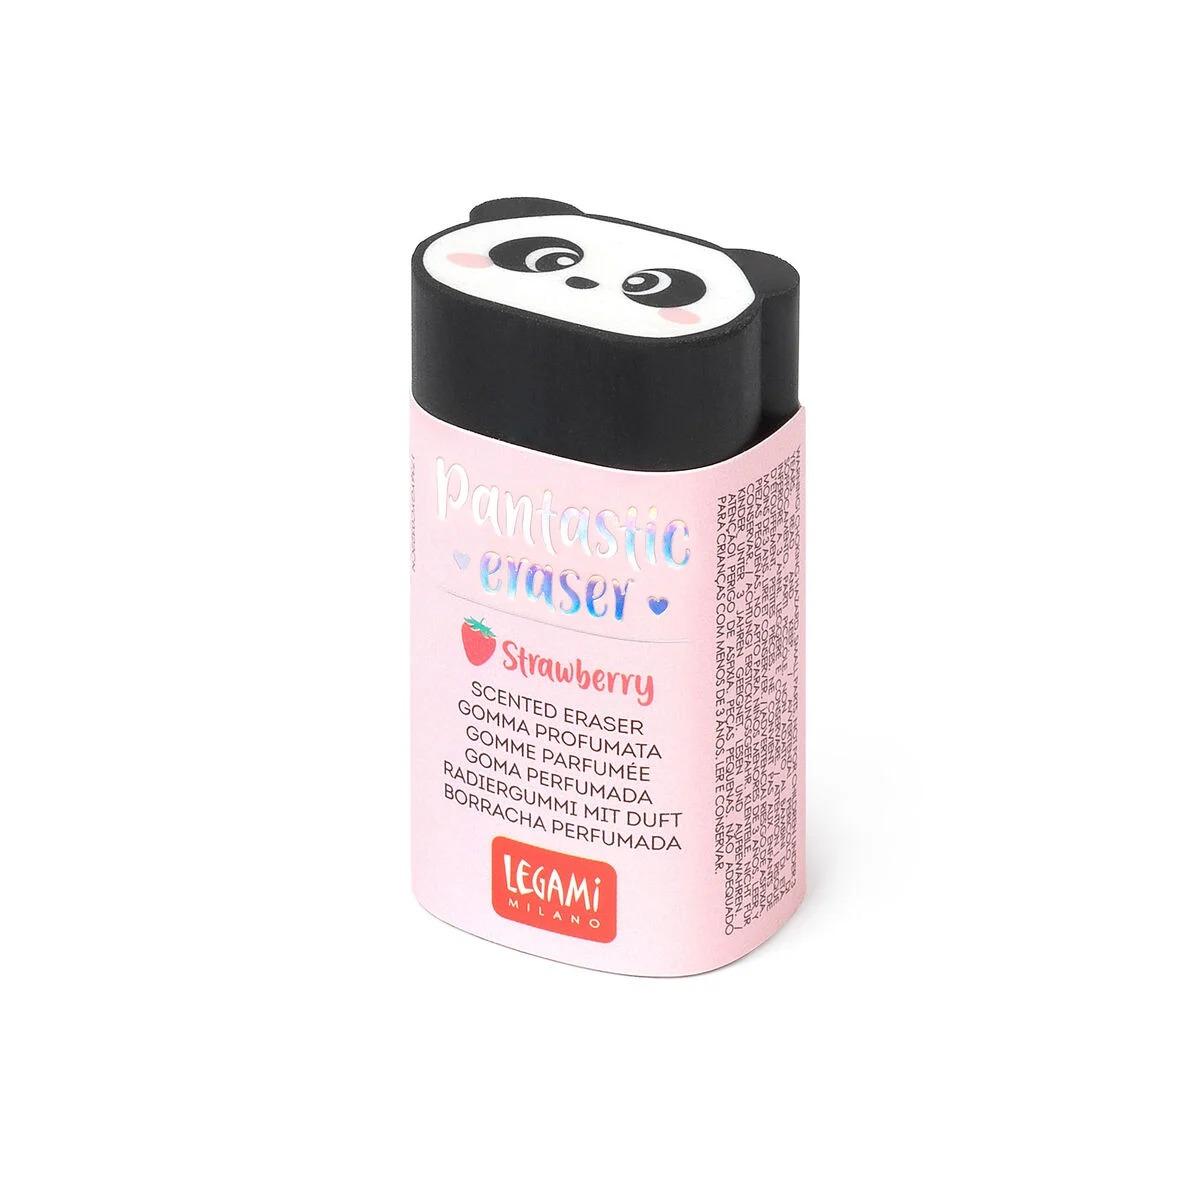 Legami scented eraser - pantastic